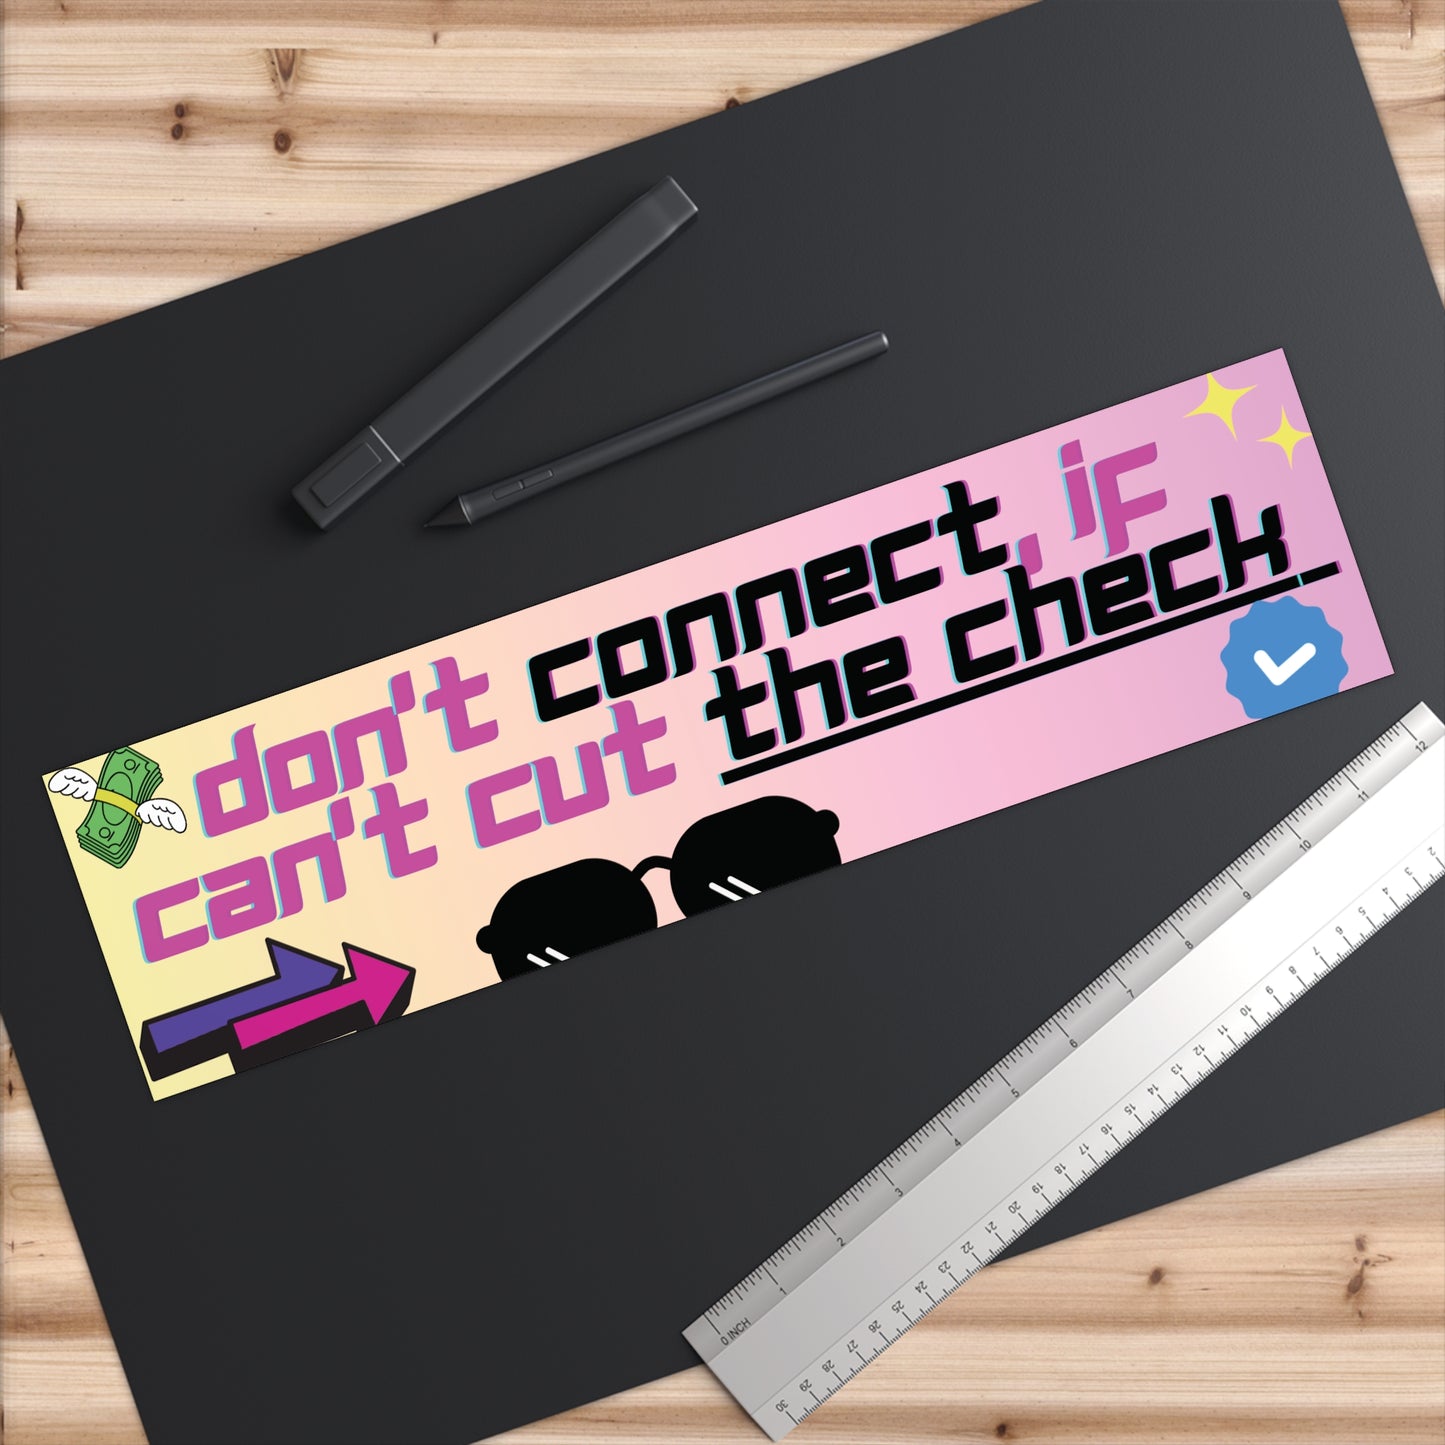 Don’t Connect Bumper Sticker